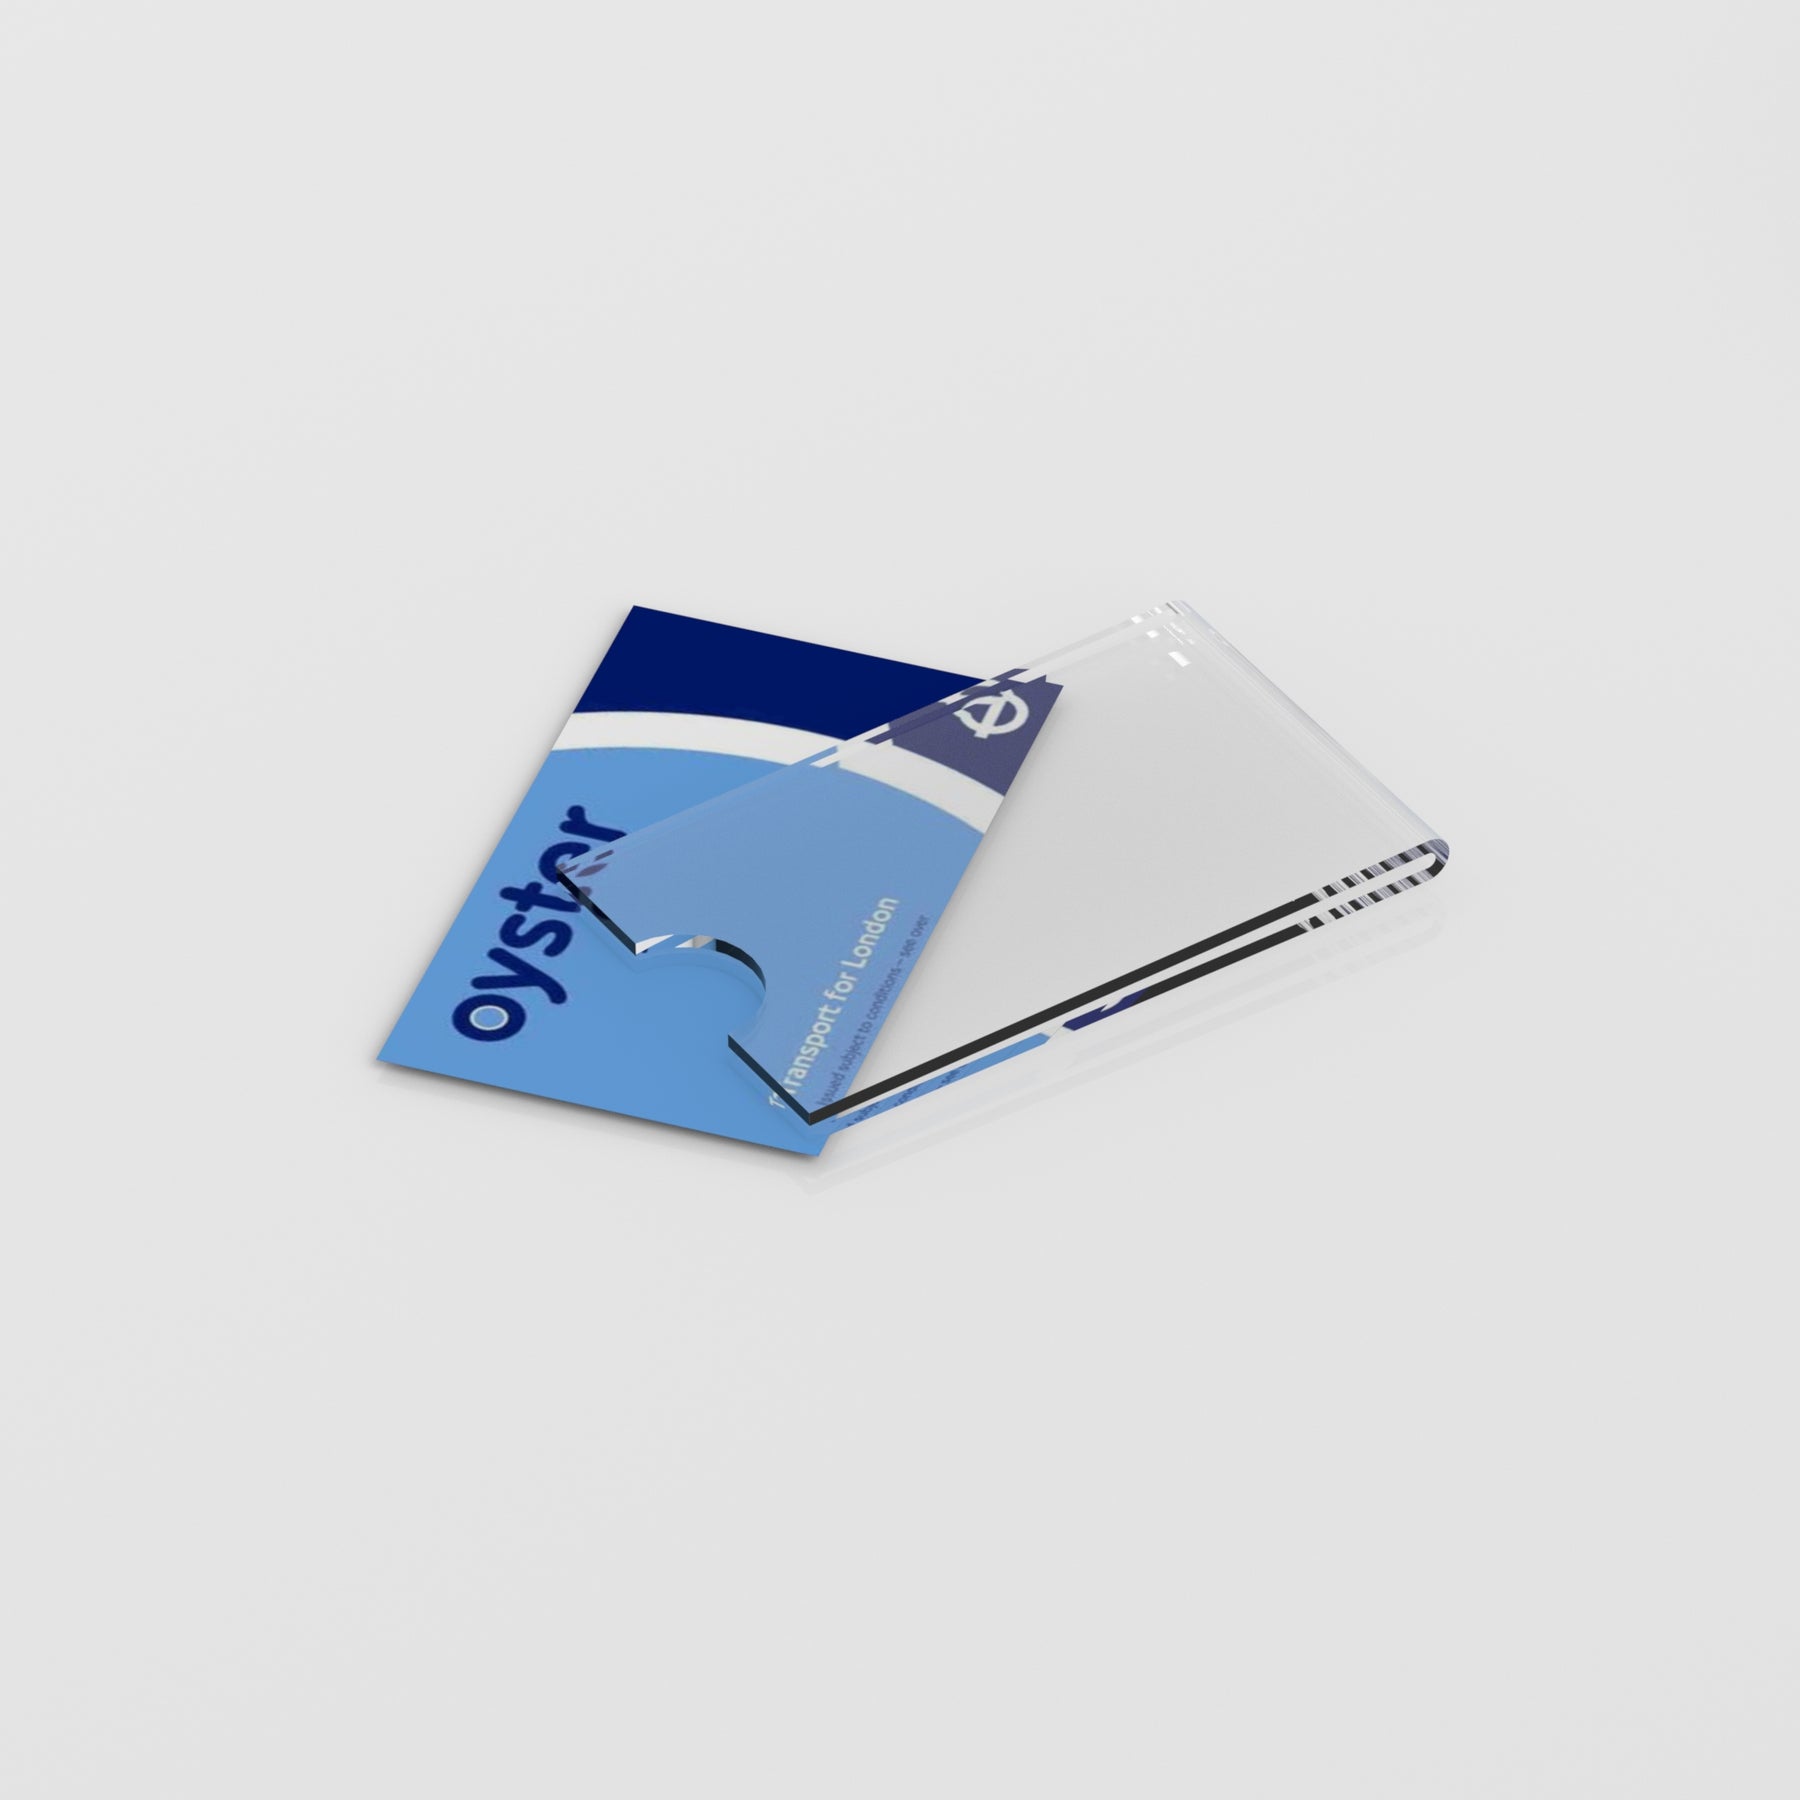 Clear Card Holder / Travel, ID / Rail Card / Business Card / PF-15